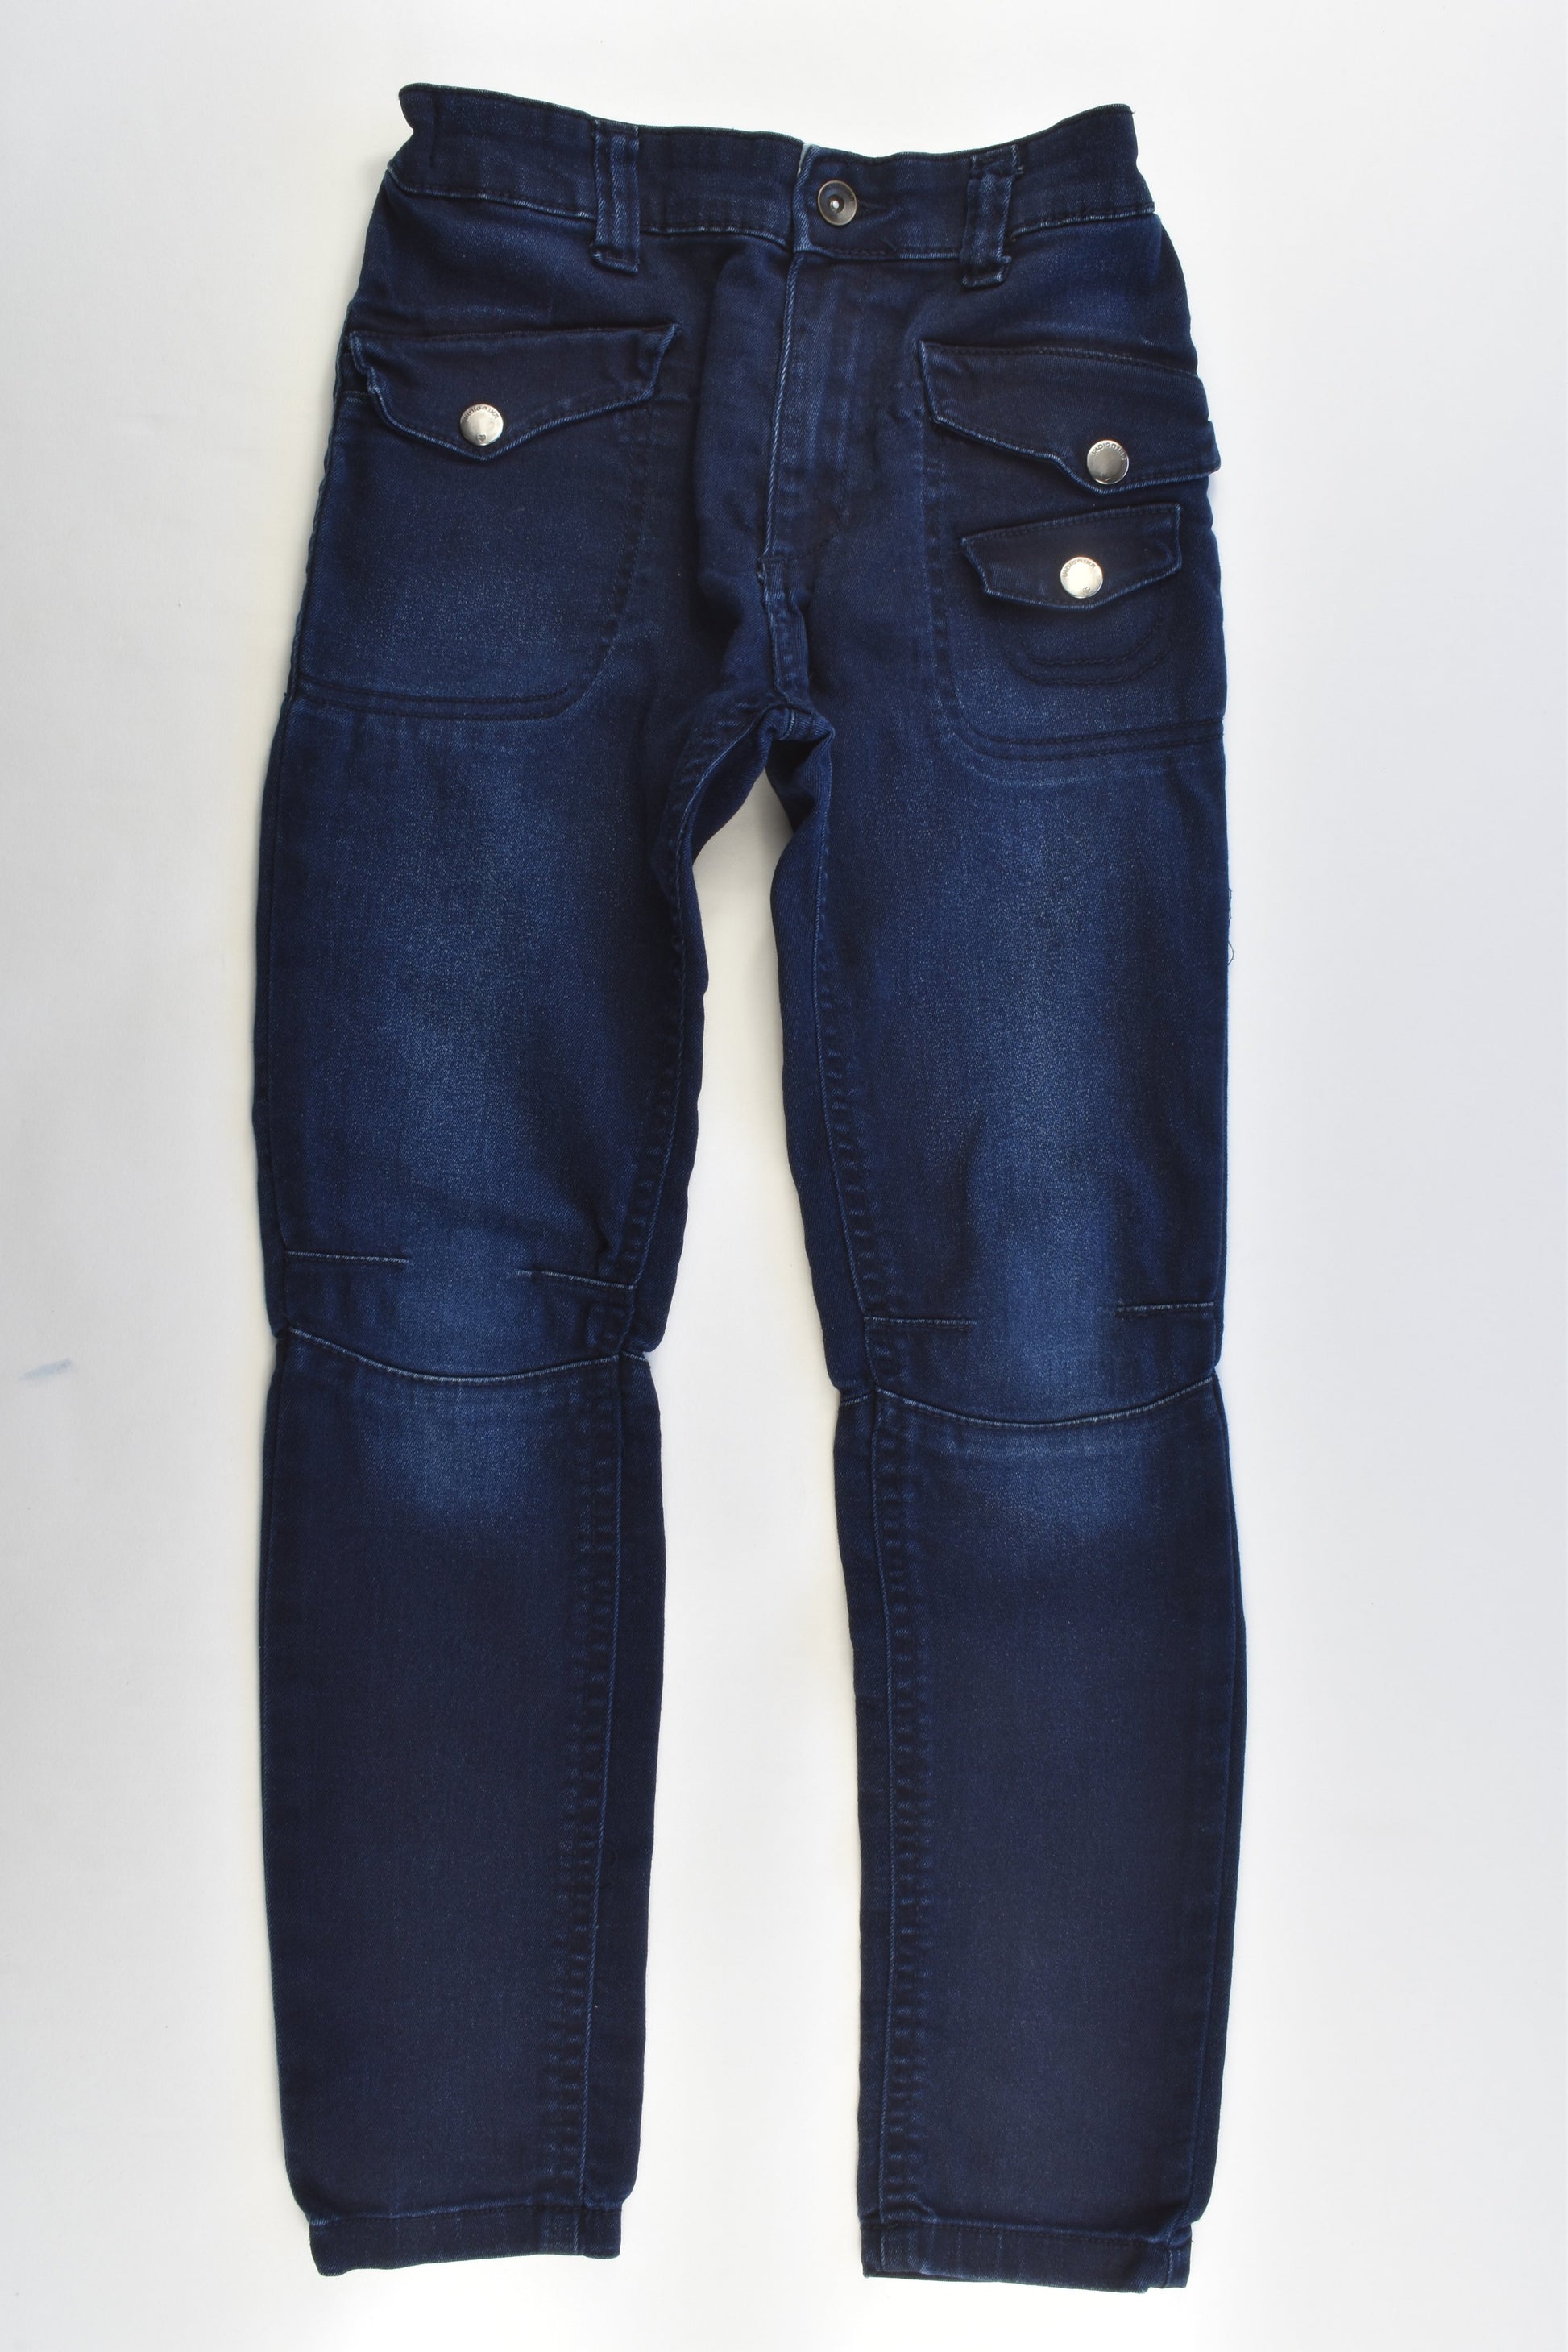 Indigo Collection by M&S Size 6-7 (122 cm) Stretchy Denim Pants